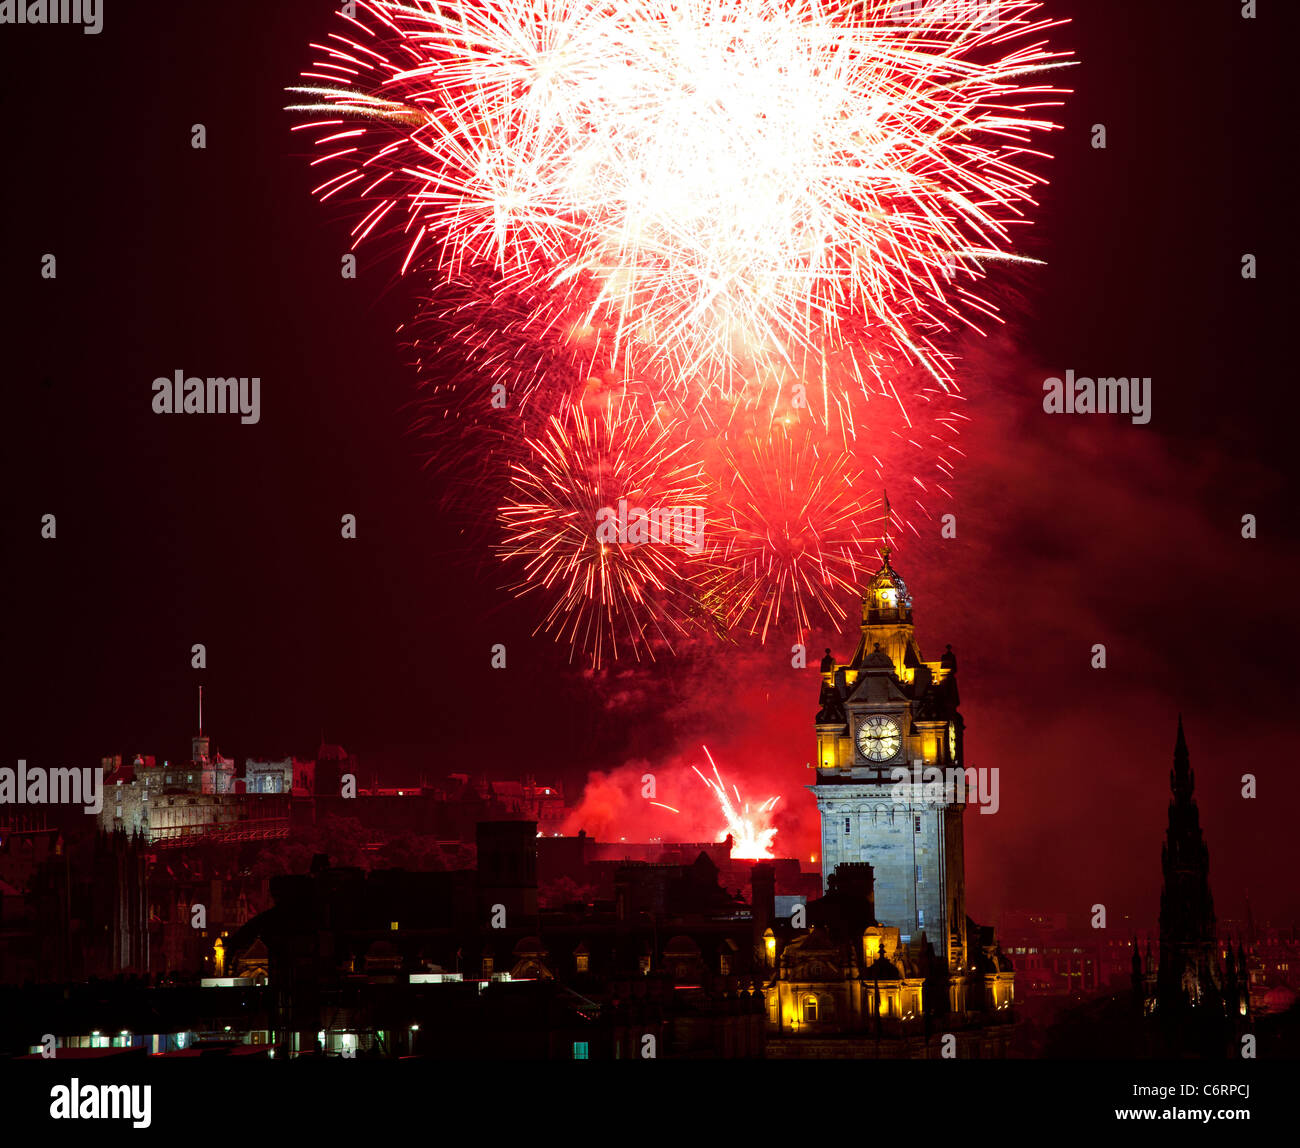 2011 Virgin Money Fireworks display Concert display explosive finale to the Edinburgh International Festival, Scotland UK Stock Photo